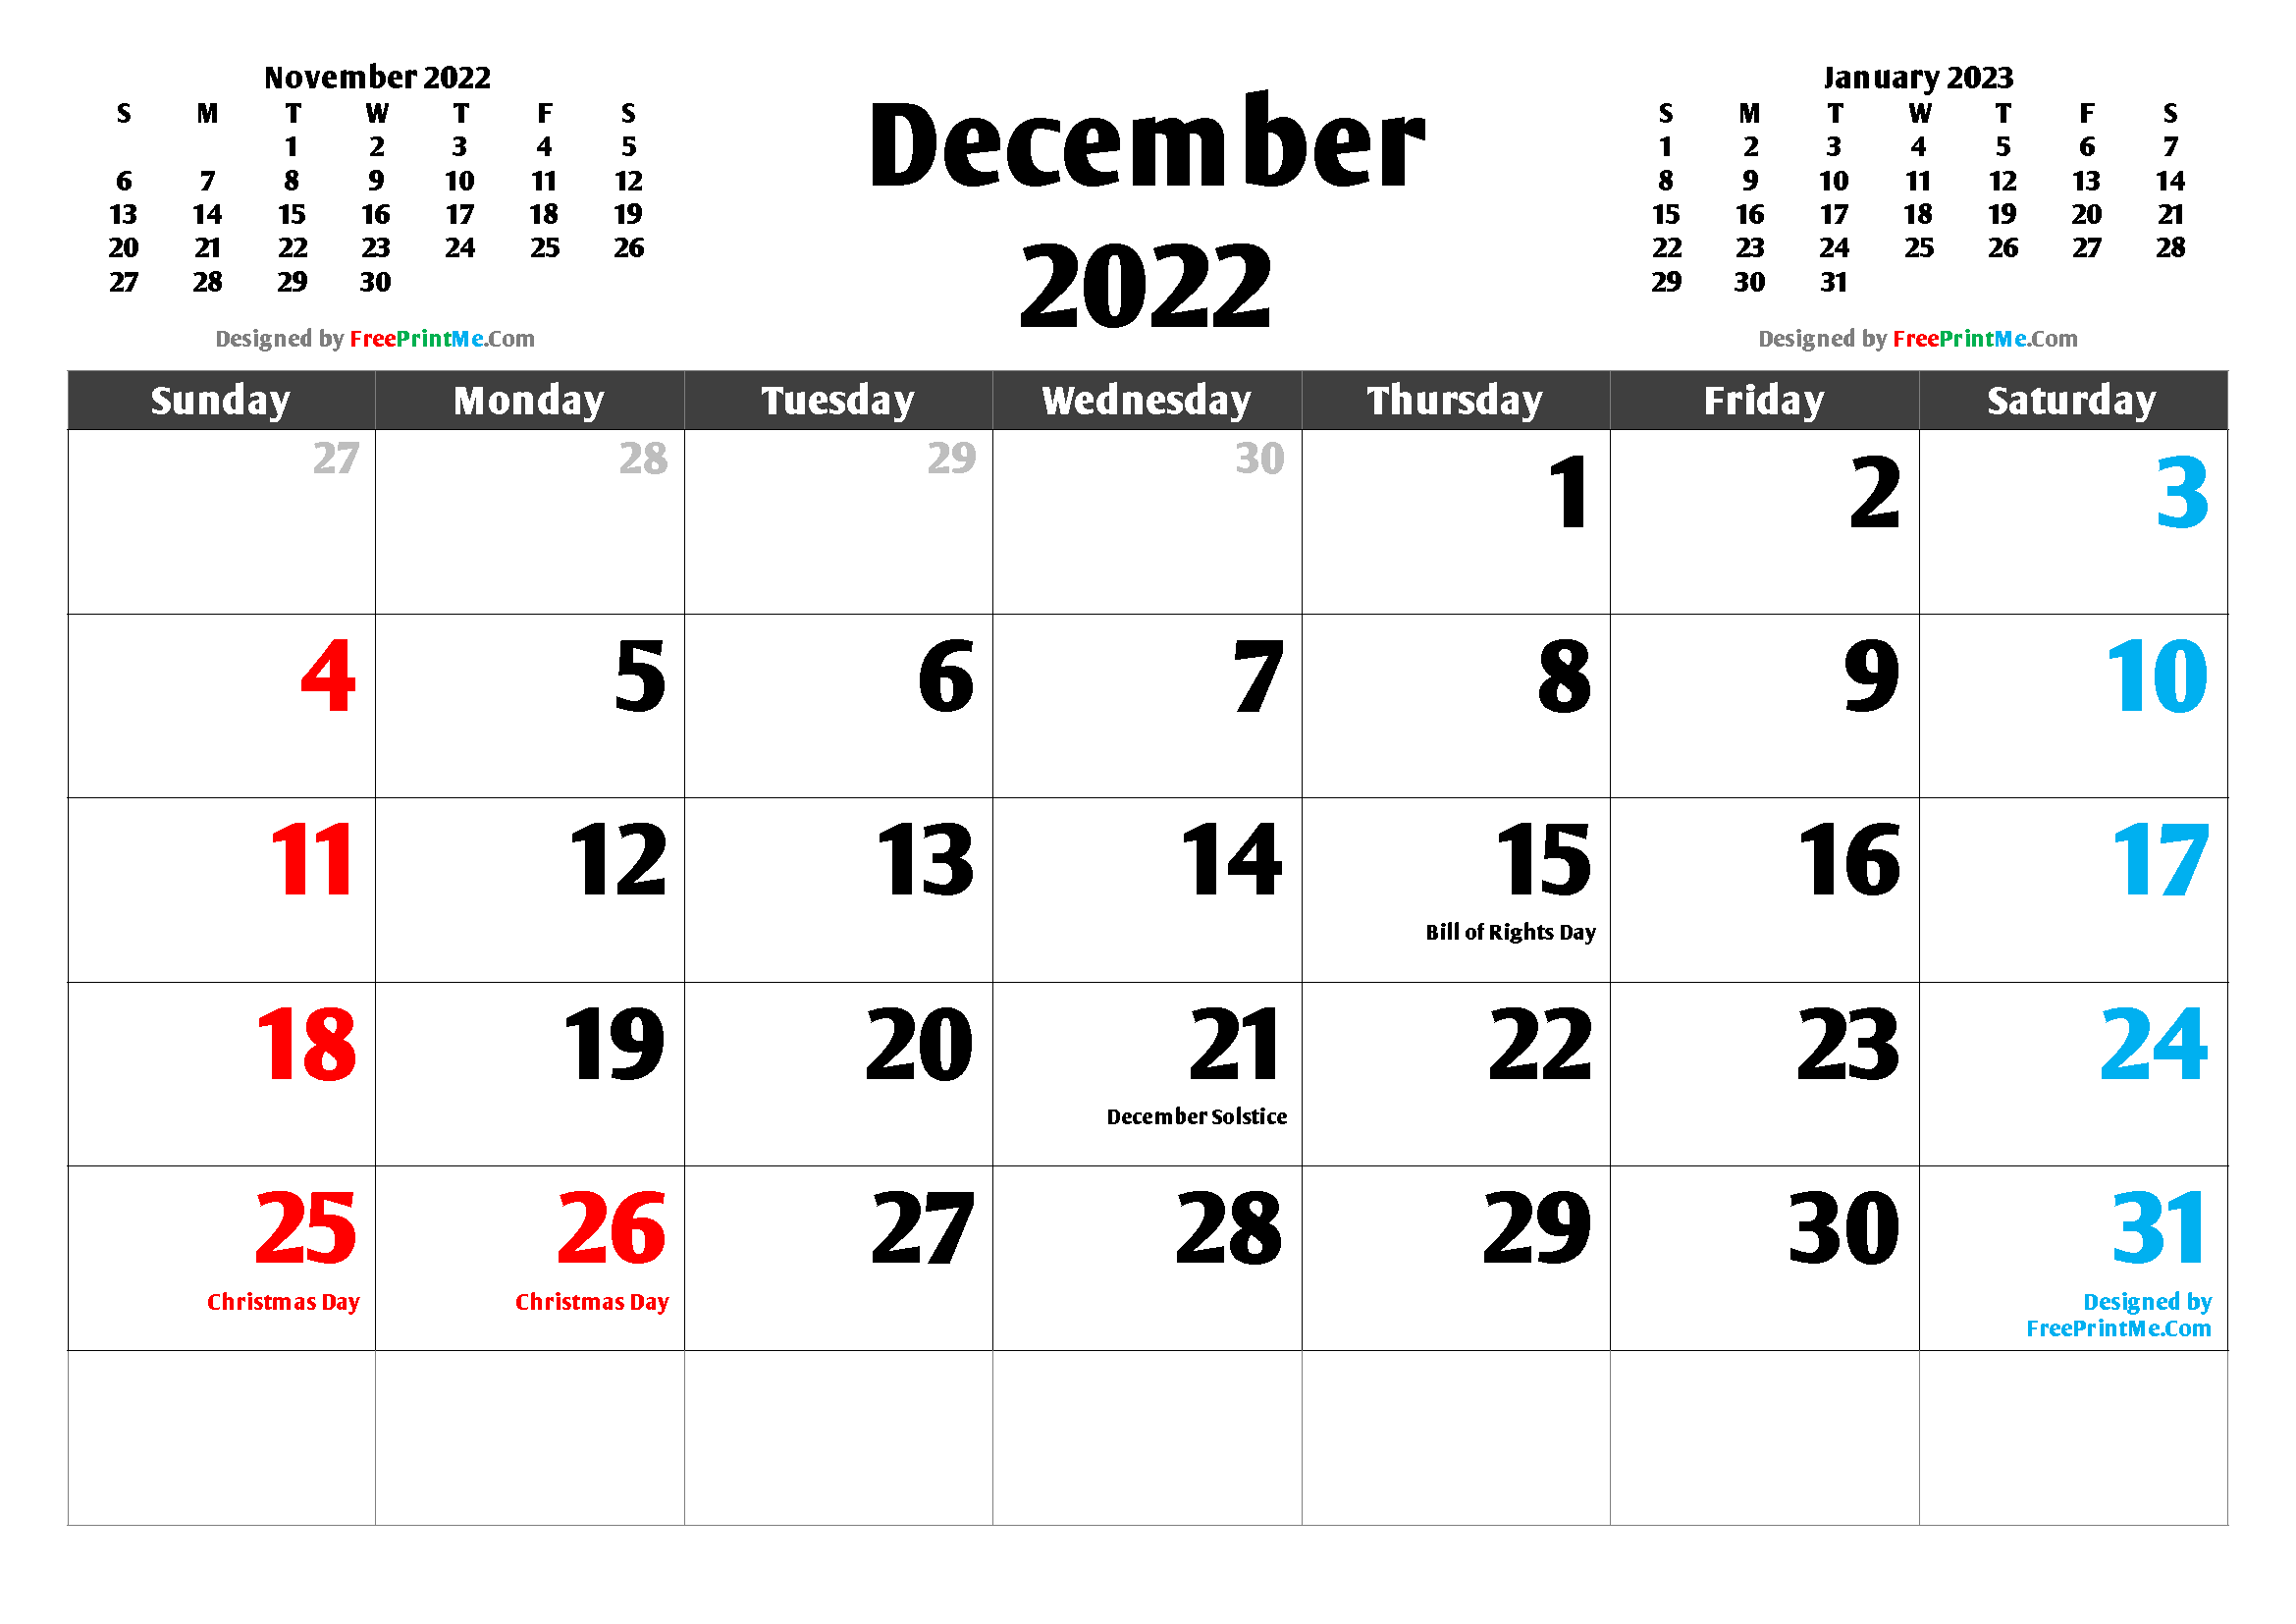 Free Printable Calendar December 2022 Free Printable December 2022 Calendar Pdf, Png Image